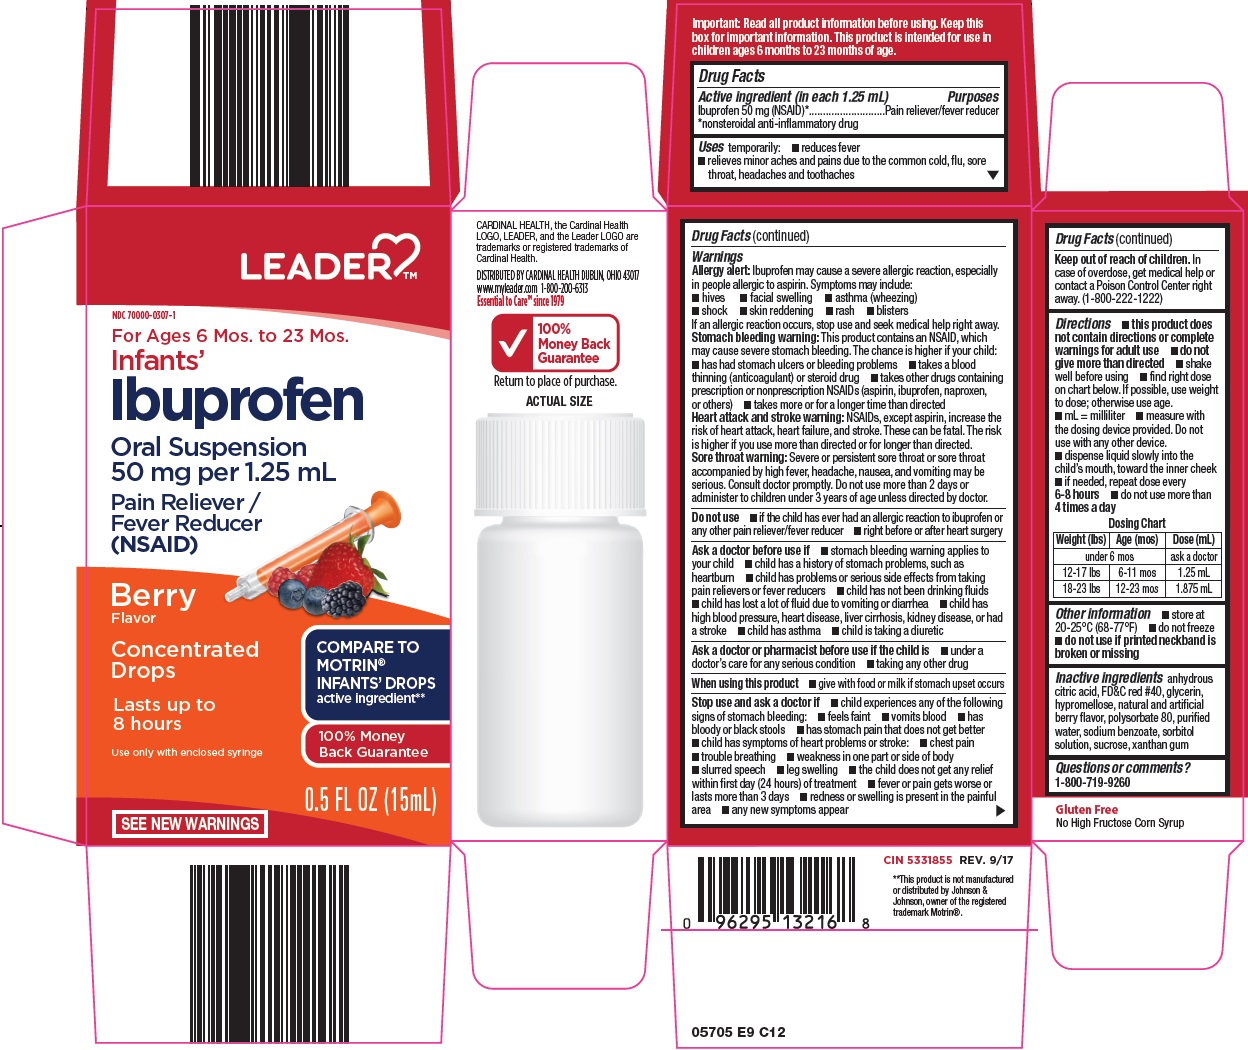 057-e9-ibuprofen.jpg